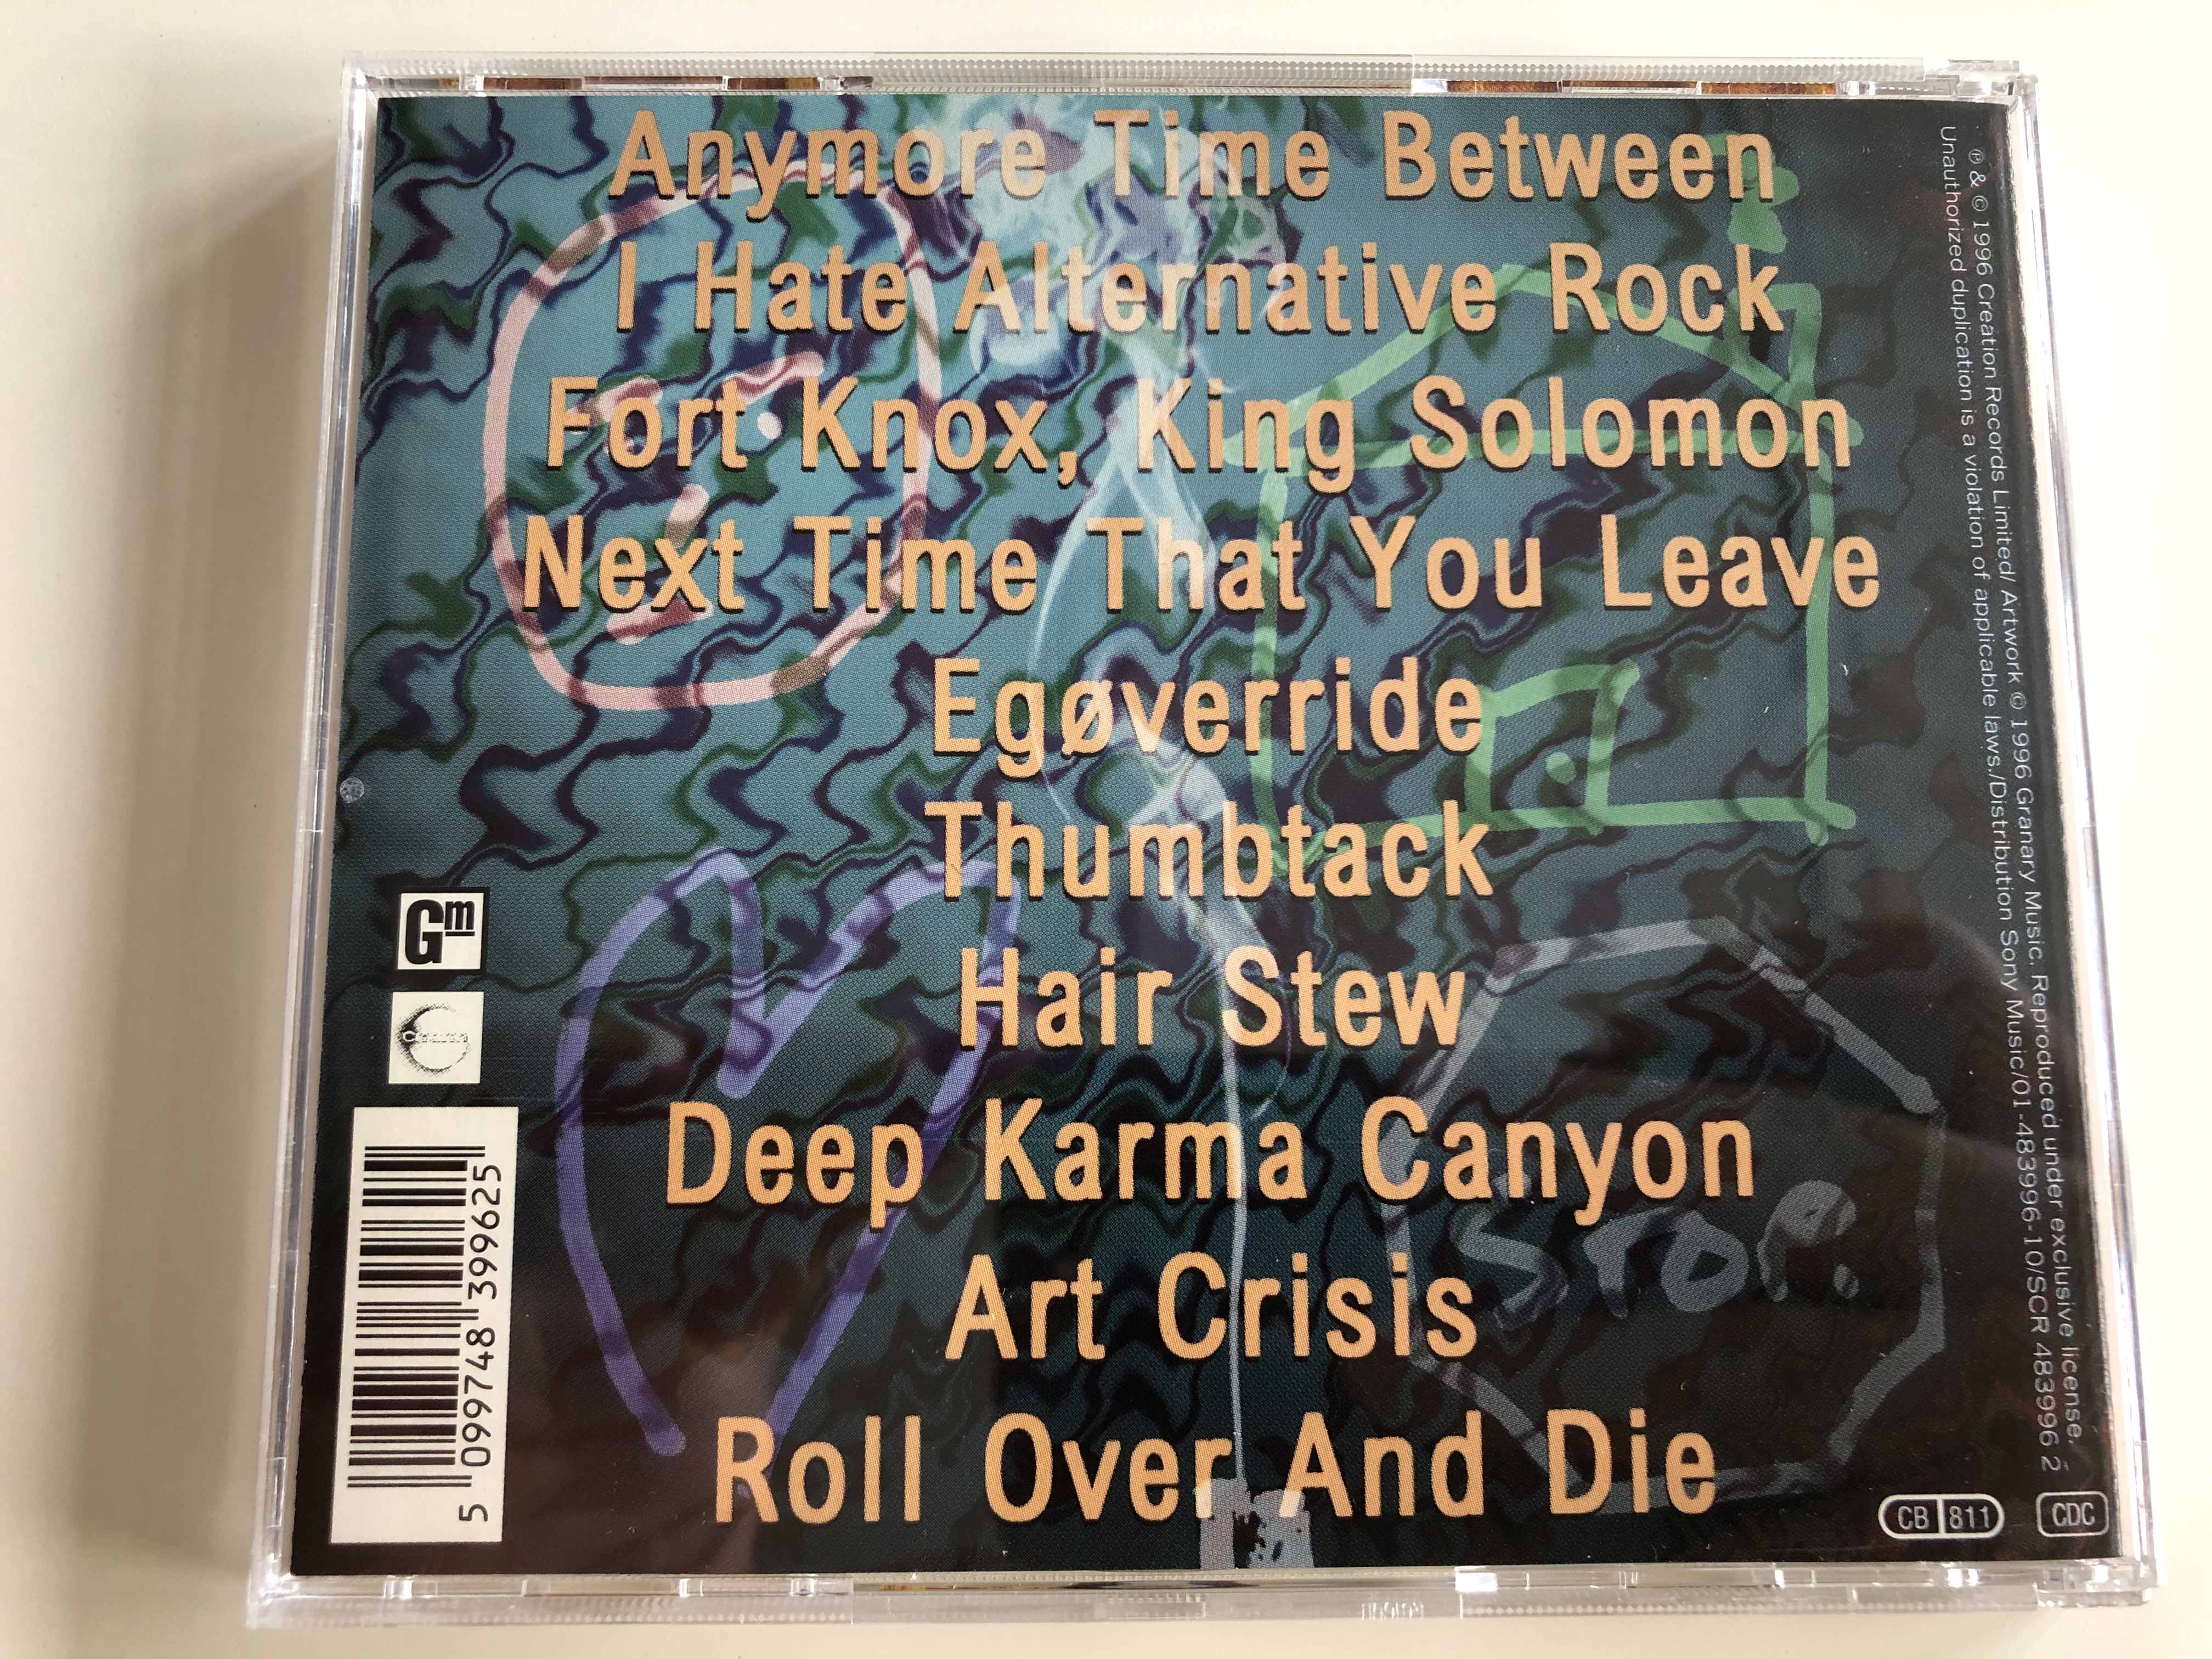 bob-mould-anymore-time-between-i-hate-alternative-rock-fort-knox-king-solomon-hair-stew-art-crisis-audio-cd-1996-scr-4839962-3-.jpg